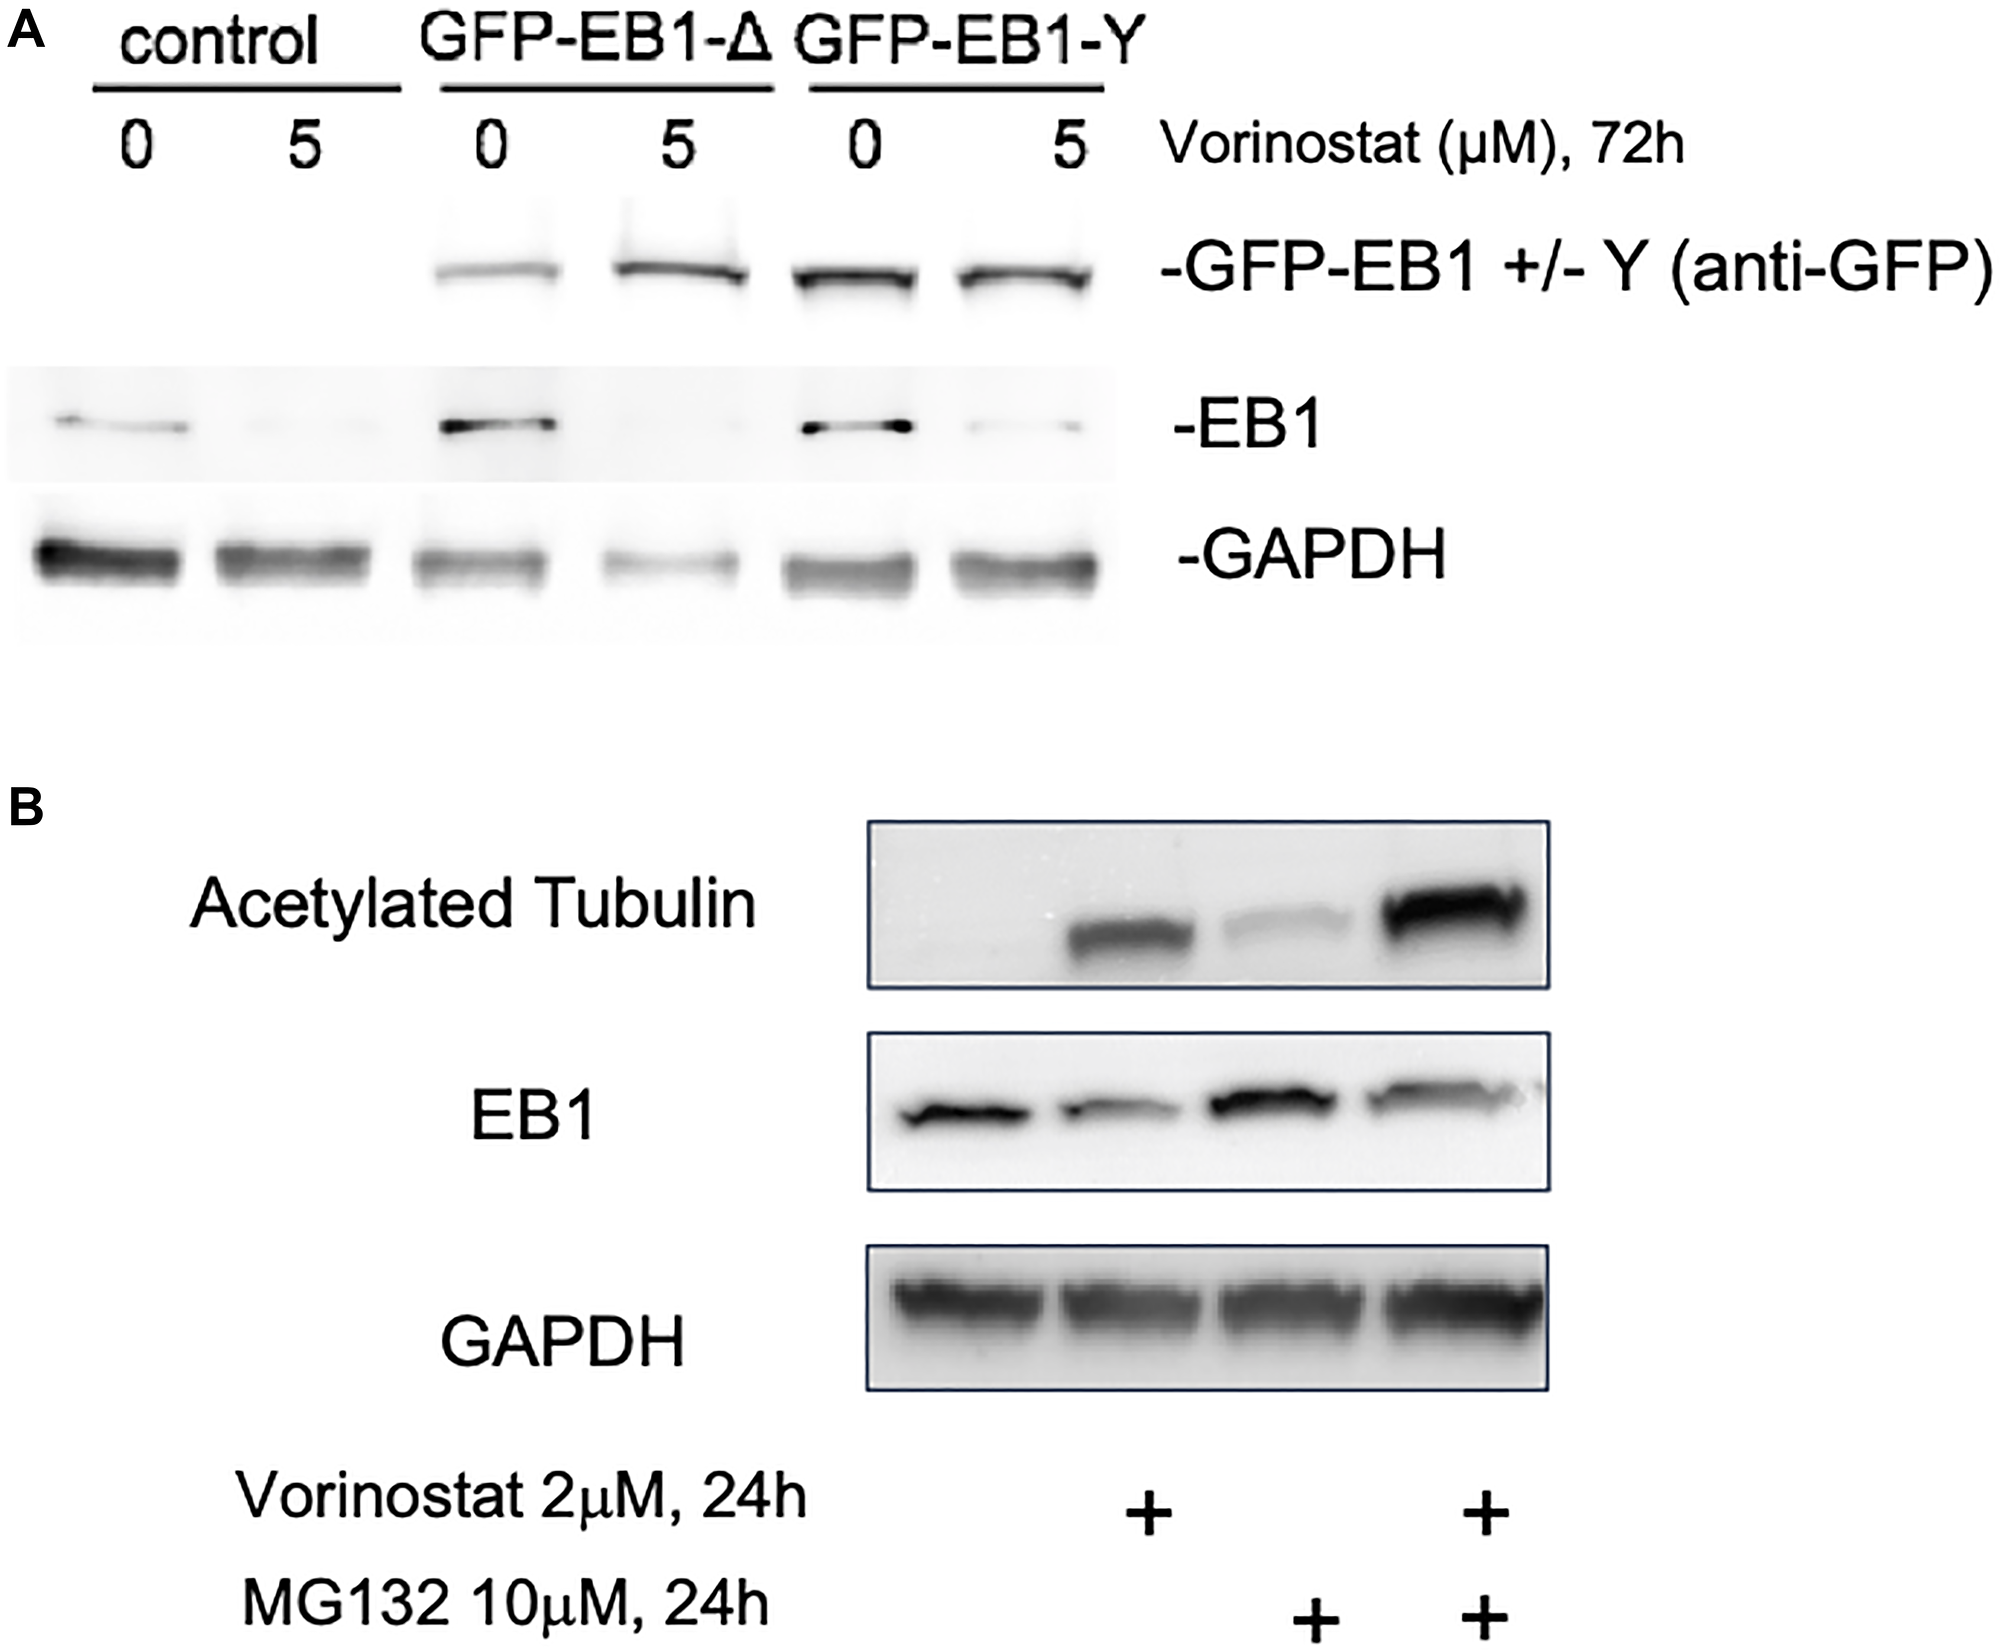 Vorinostat changes U87-MG endogenous EB1 expression but not GFP-EB1.